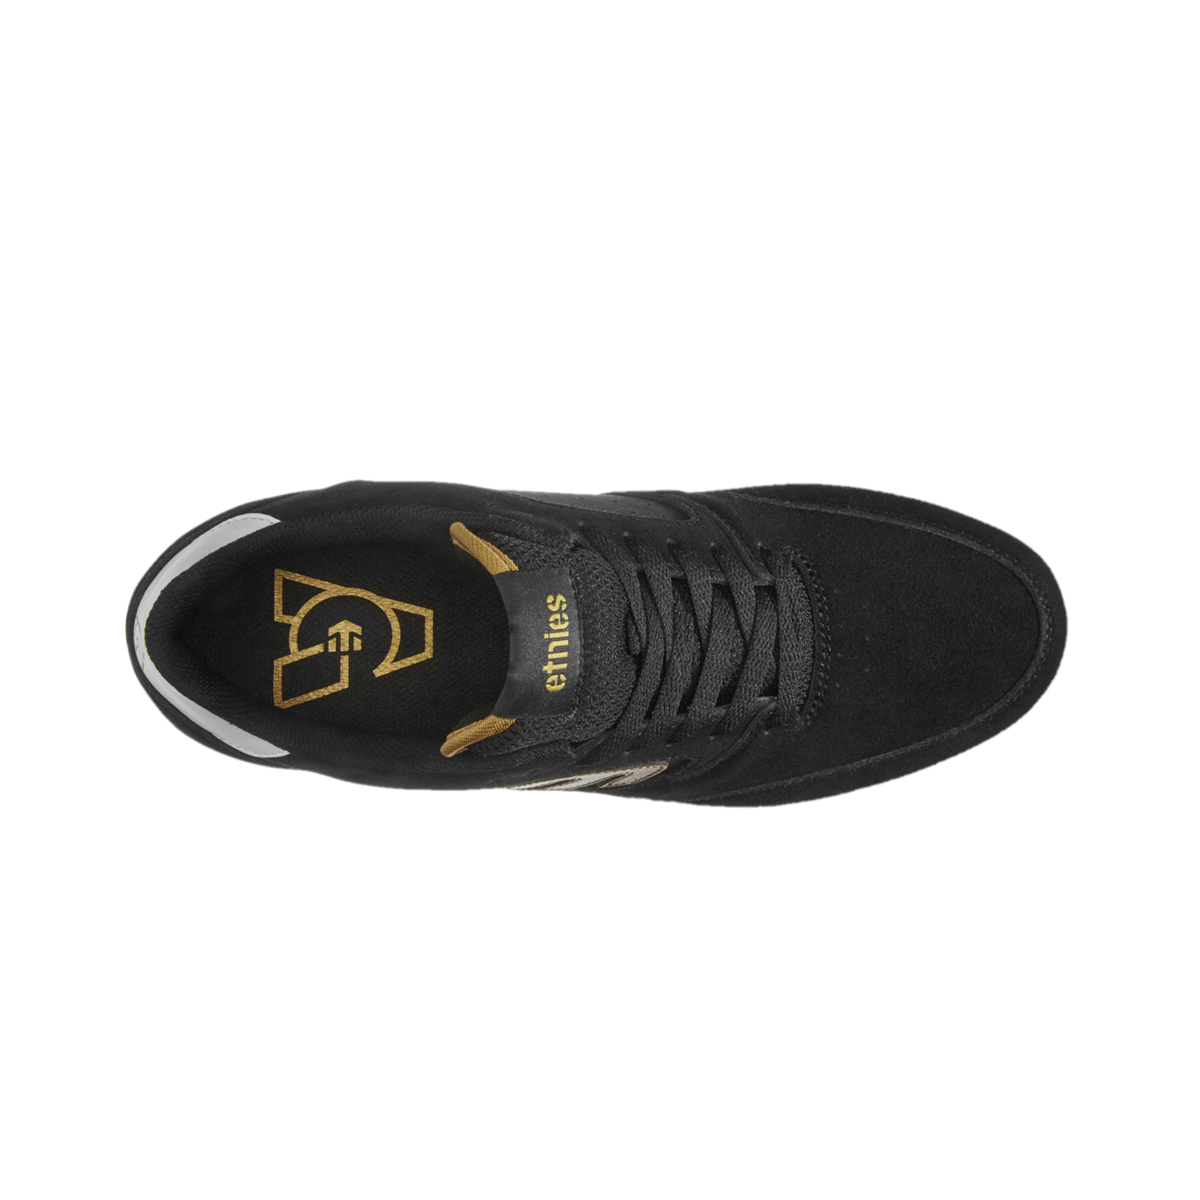 ETNIES 4101000516 973 VEER MICHELIN X AURELIEN GIRAUD MN'S (Medium) Black/Gold/White Suede, Synthetic & Textile Skate Shoes